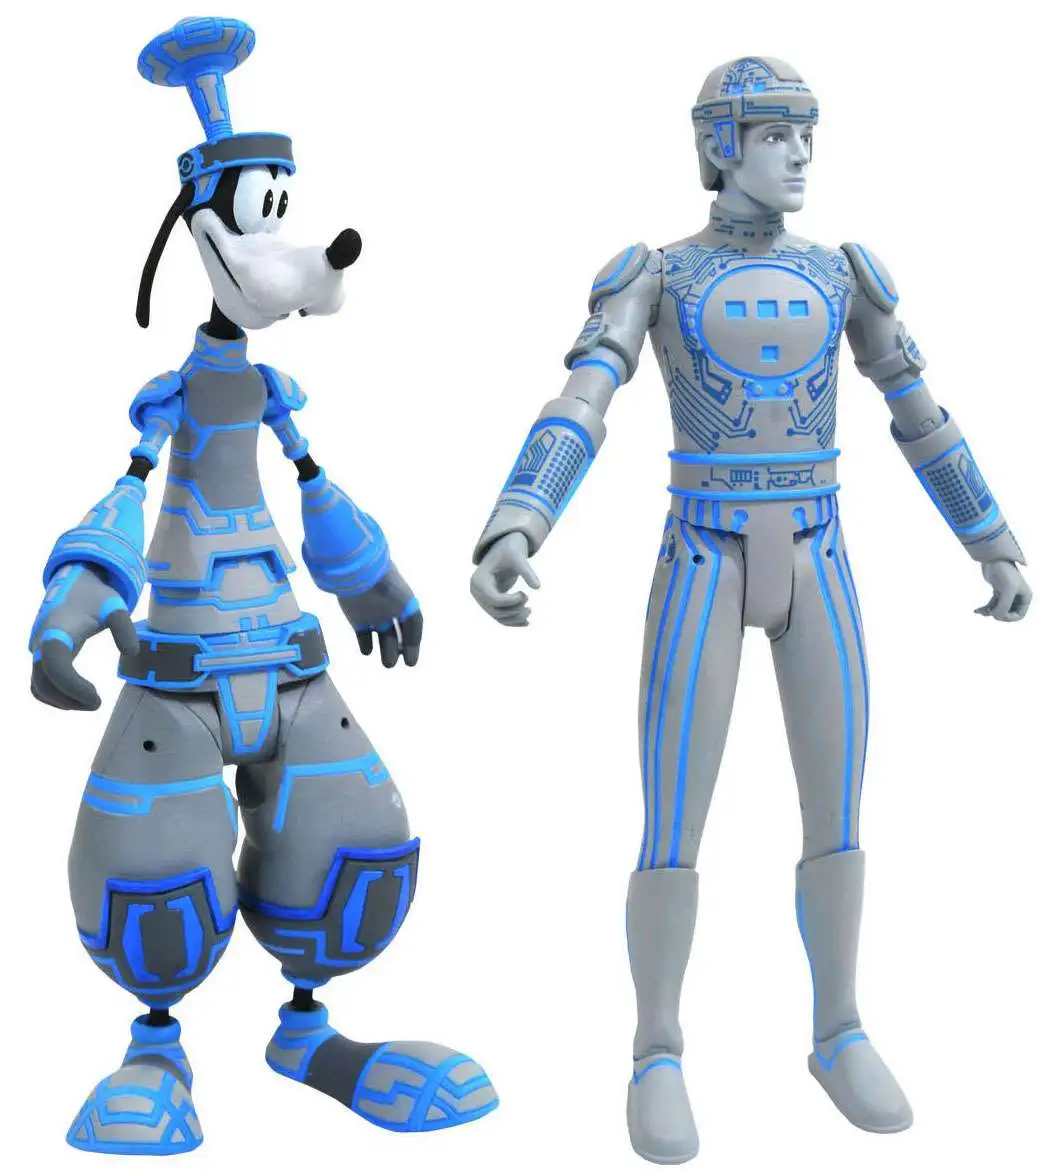 Disney Kingdom Hearts Series 2 BBS Goofy & Aqua Diamond Select Action Figure Set for sale online 